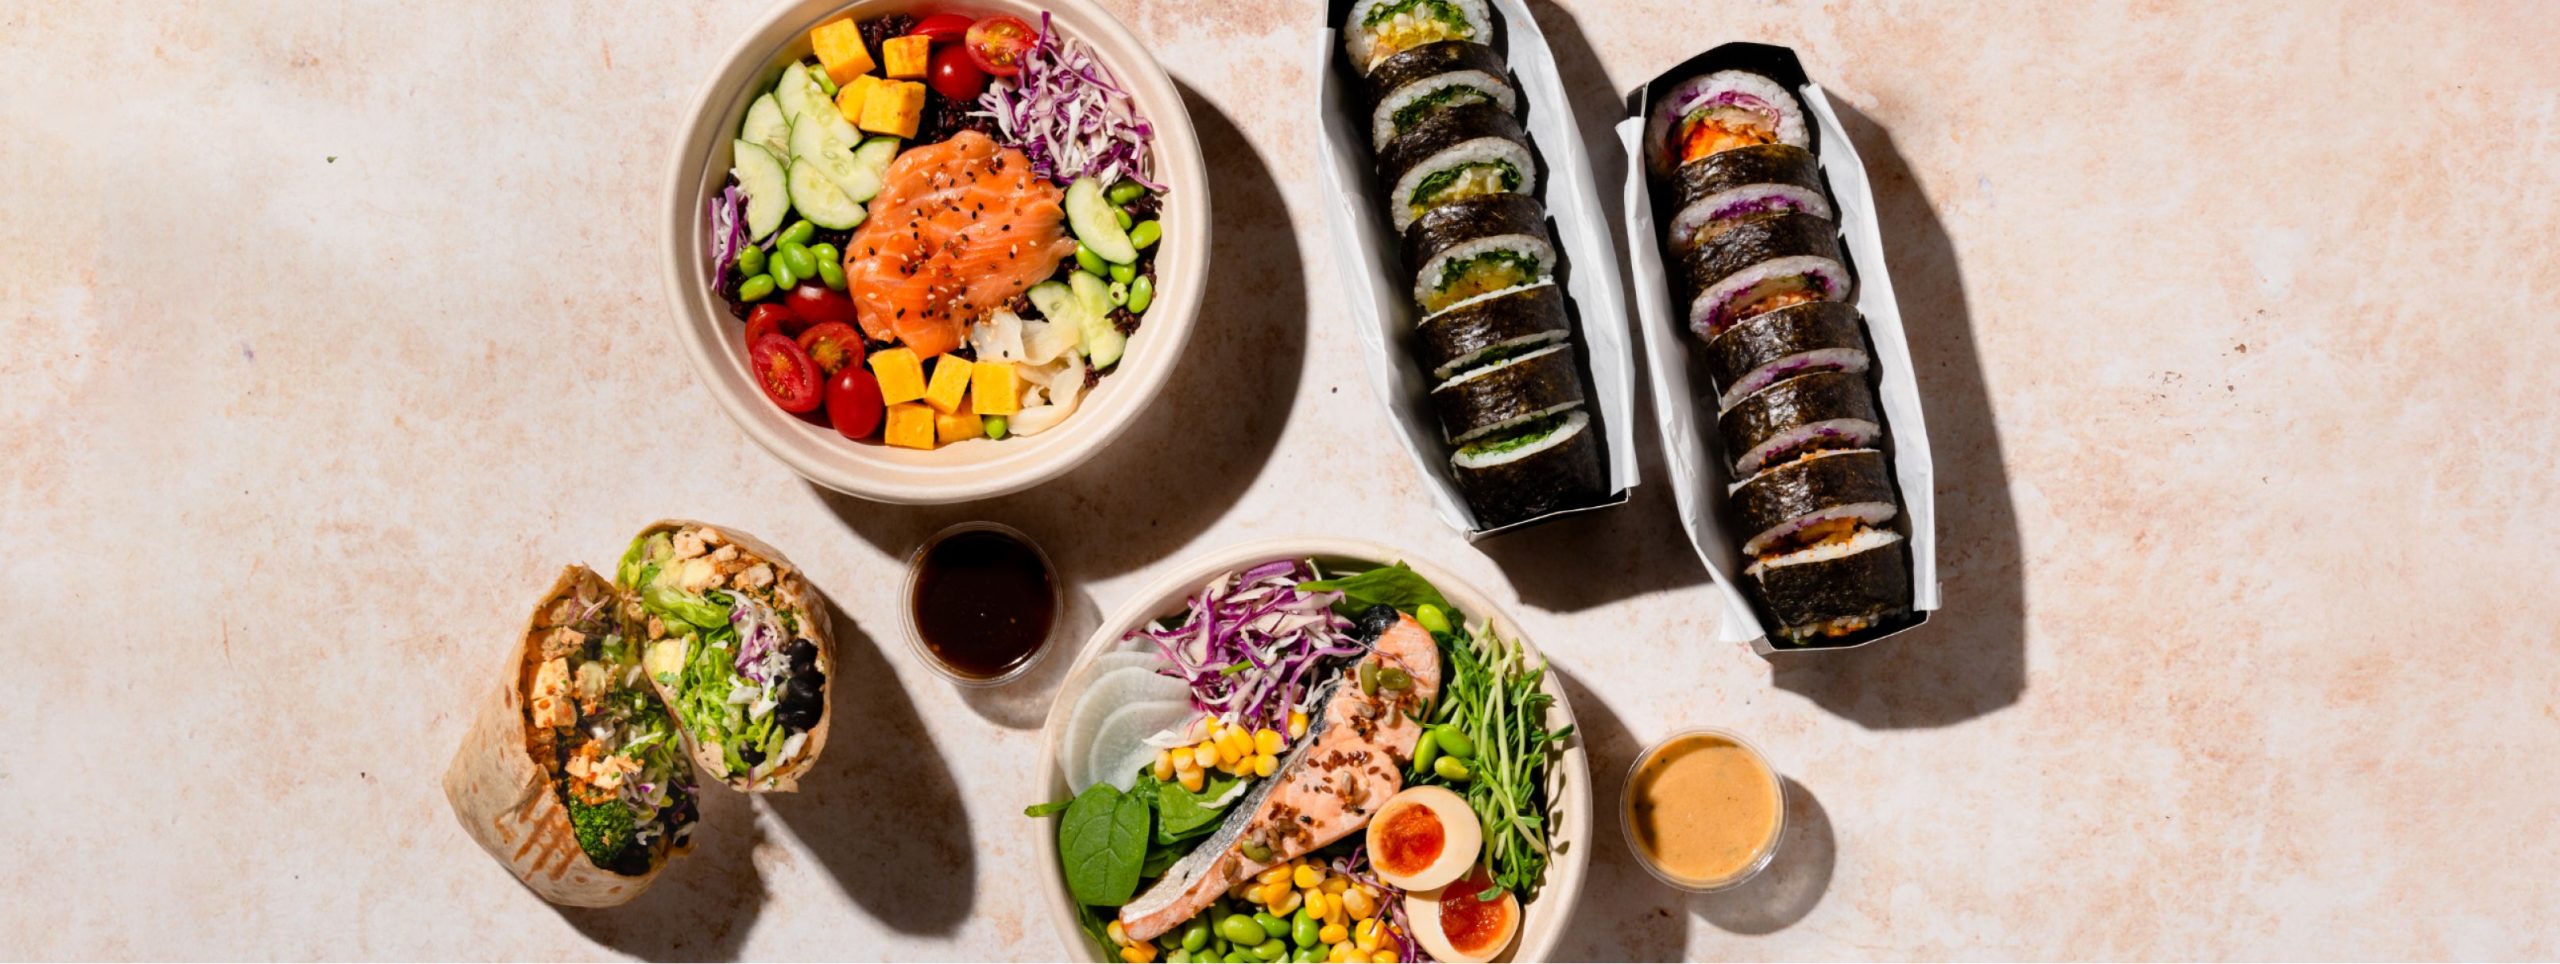 freshkitchen sushi roll & bowls